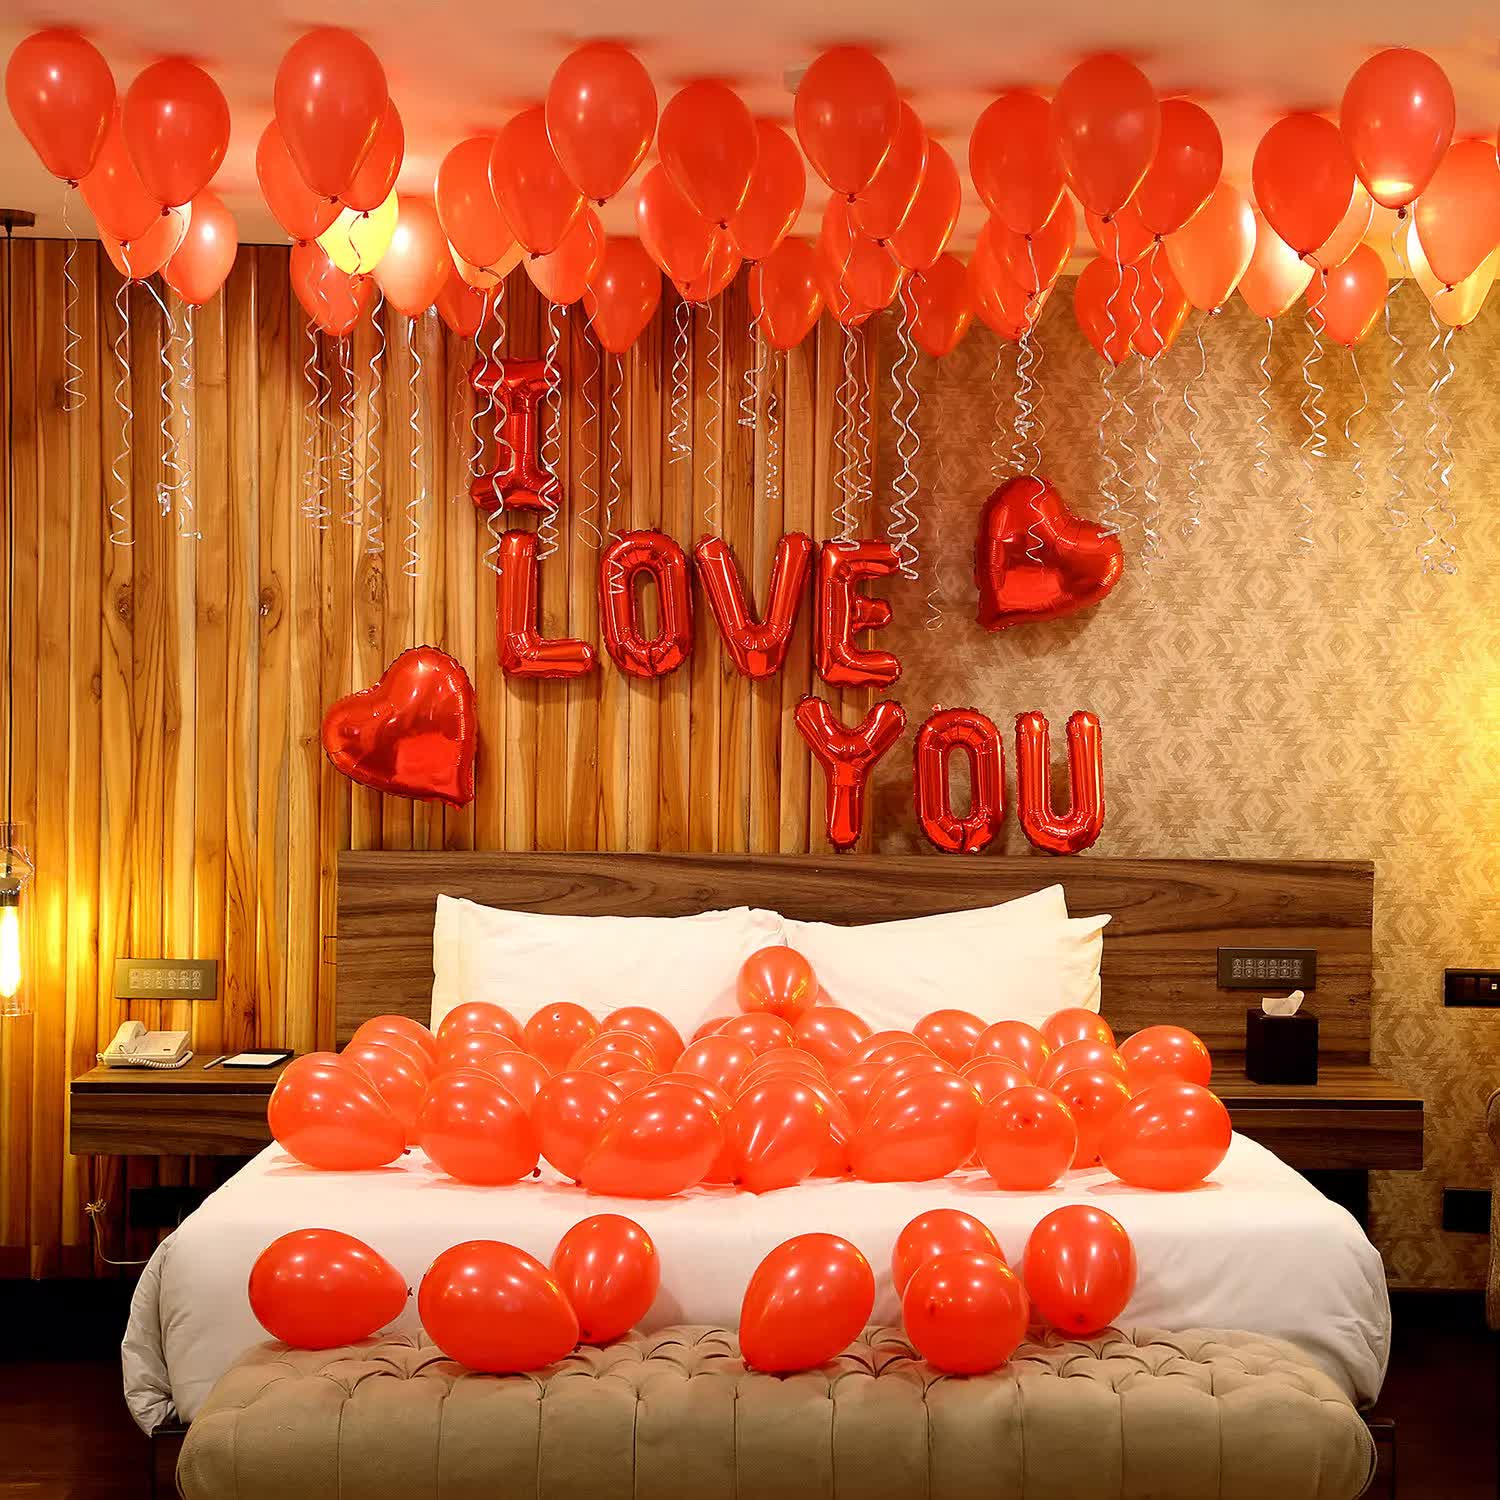 100 LOVE HEART SHAPE BALLOONS*Wedding Party Romantic ballon Birthday heart shape 